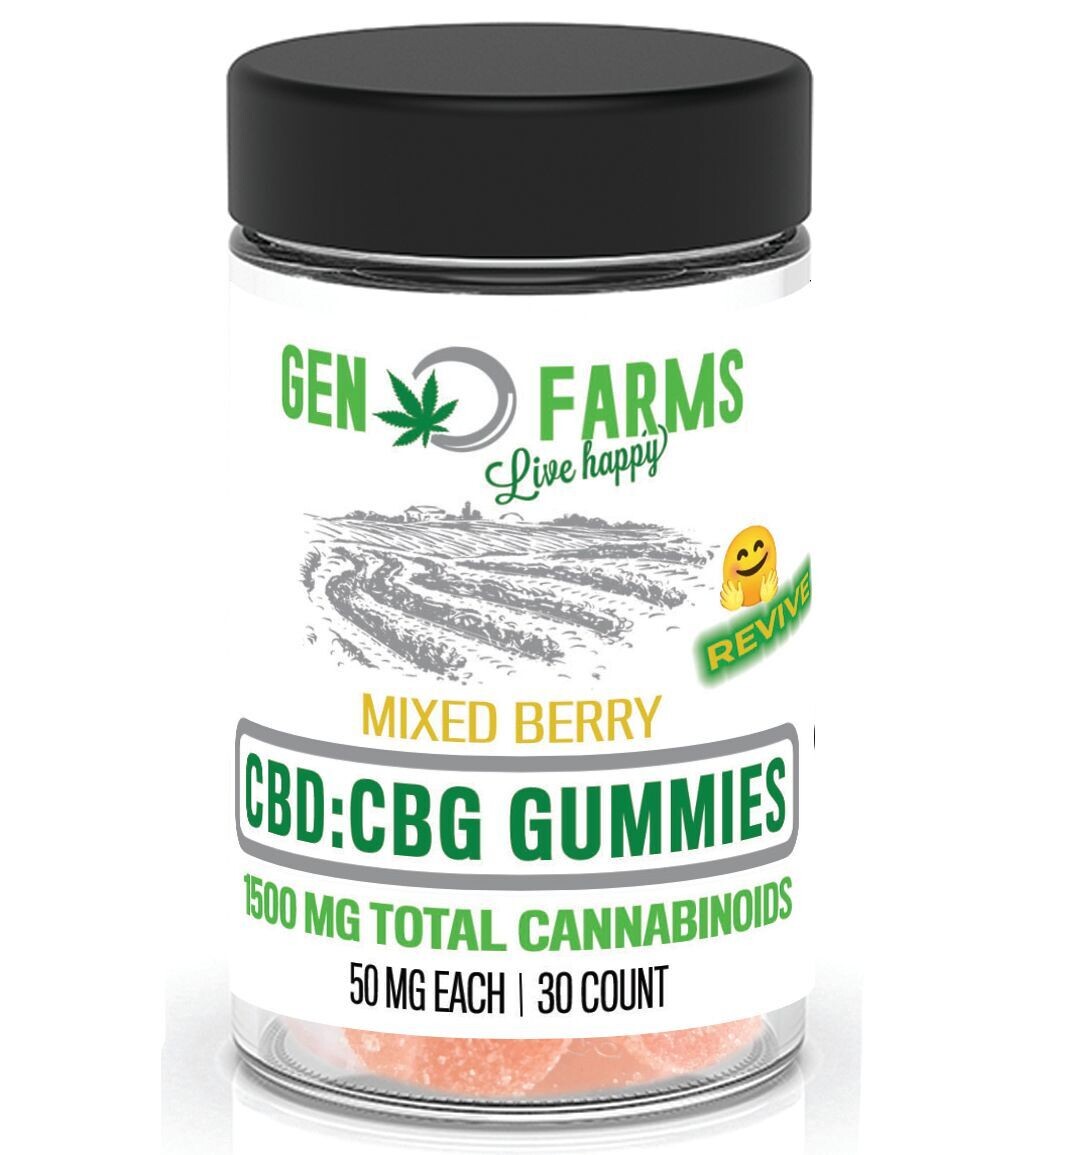 Mixed Berry CBD:CBG (1:1) Gummies